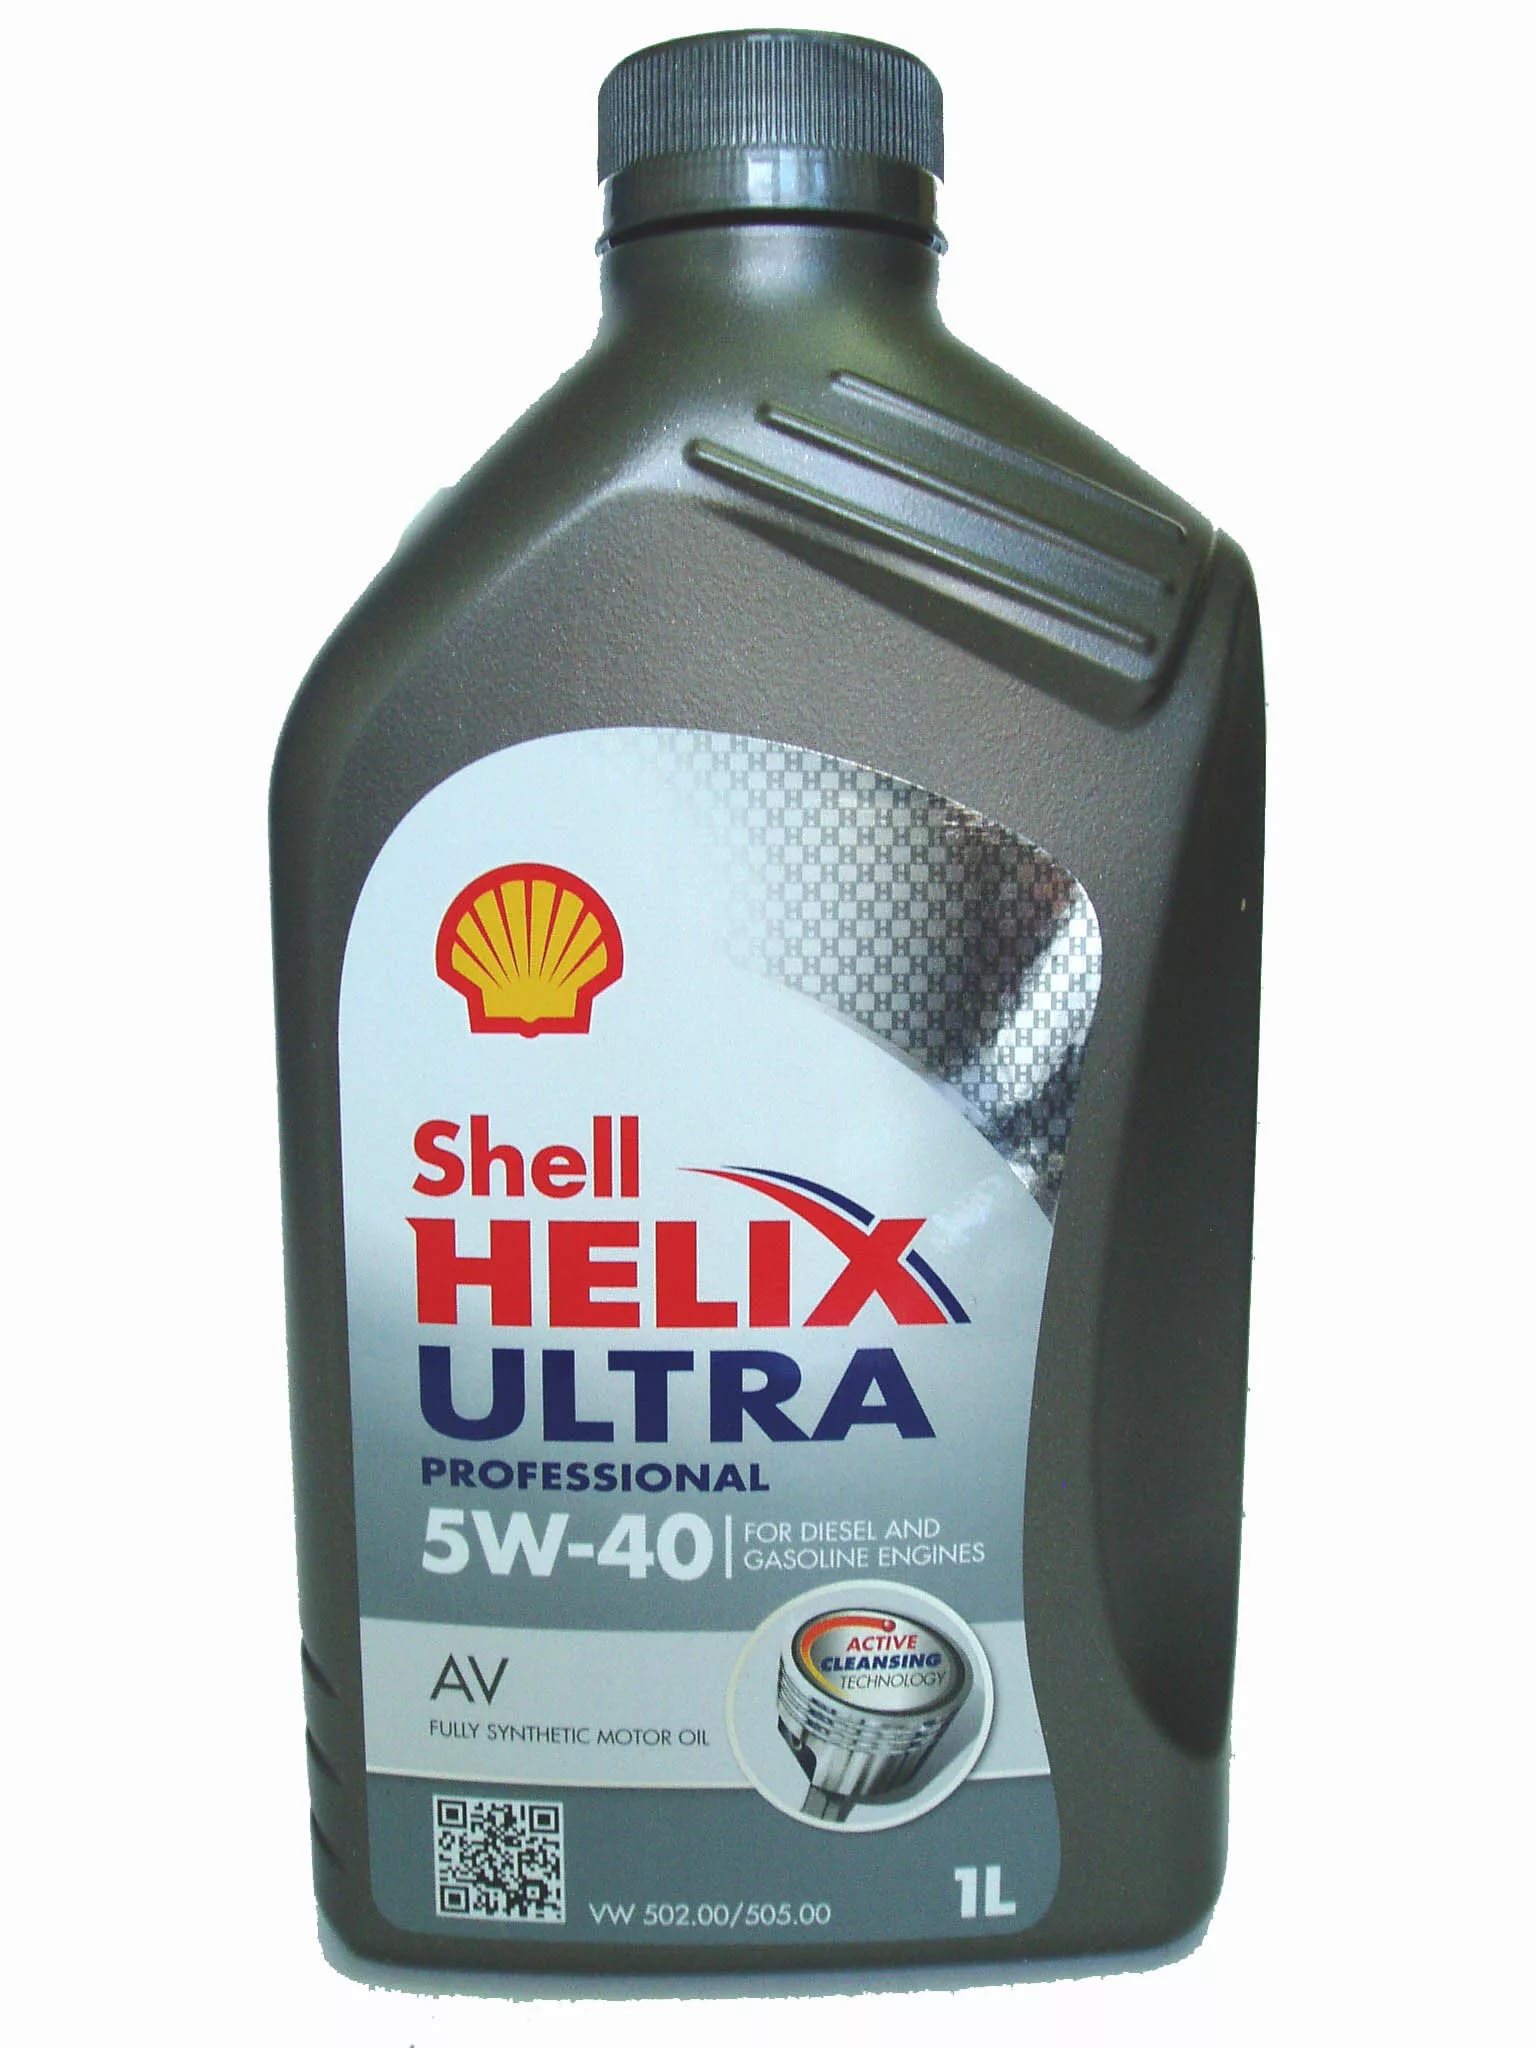 Ultra av. Shell Helix Ultra professional av 5w-40 4л. Shell Helix Ultra professional av 5w-40. Shell Helix Ultra professional 5w40. Helix Ultra professional av 5w-40.